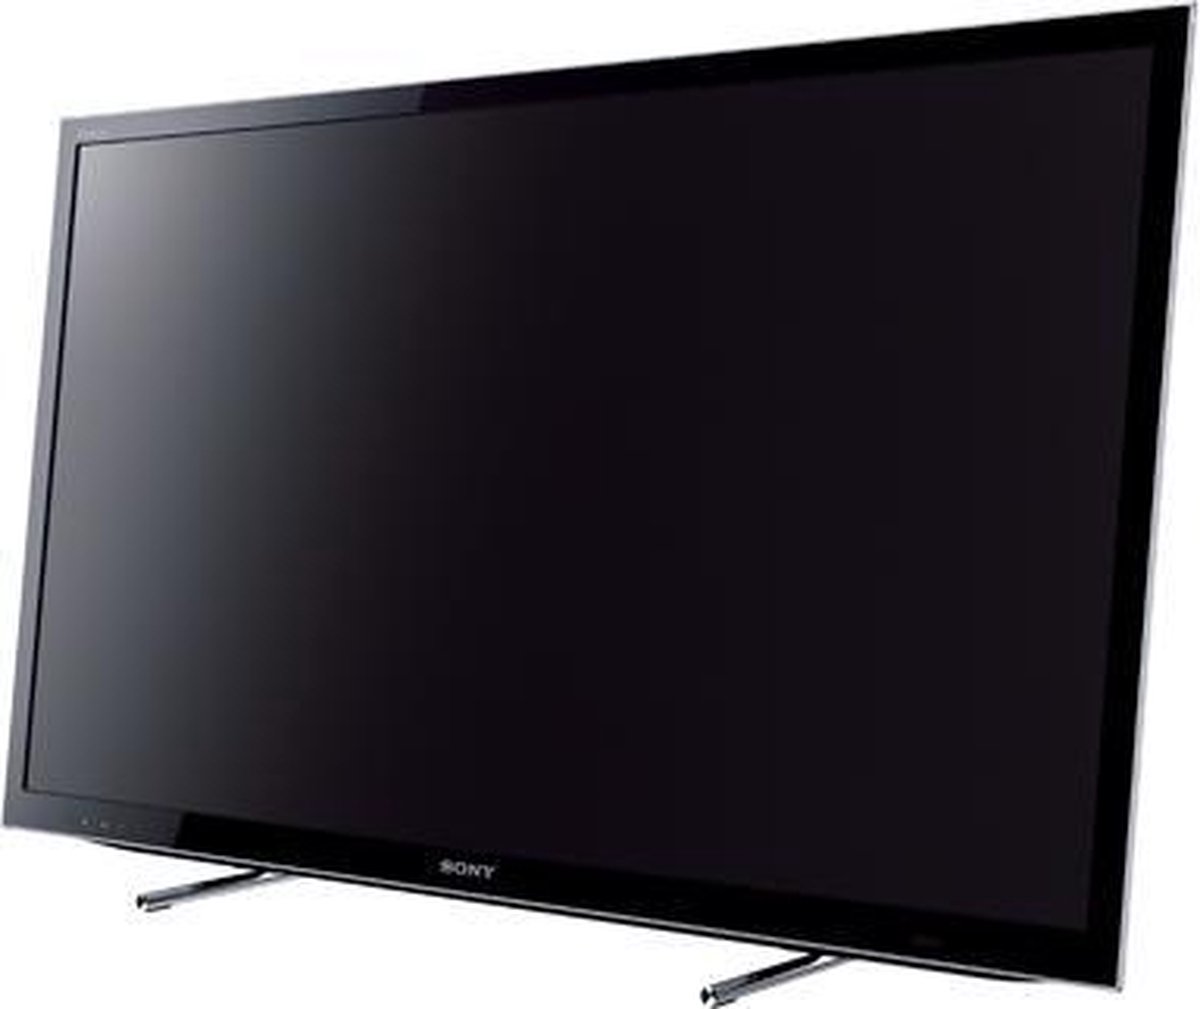 Sony KDL-40HX750 - 3D LED TV - 40 inch - Full HD - Internet TV